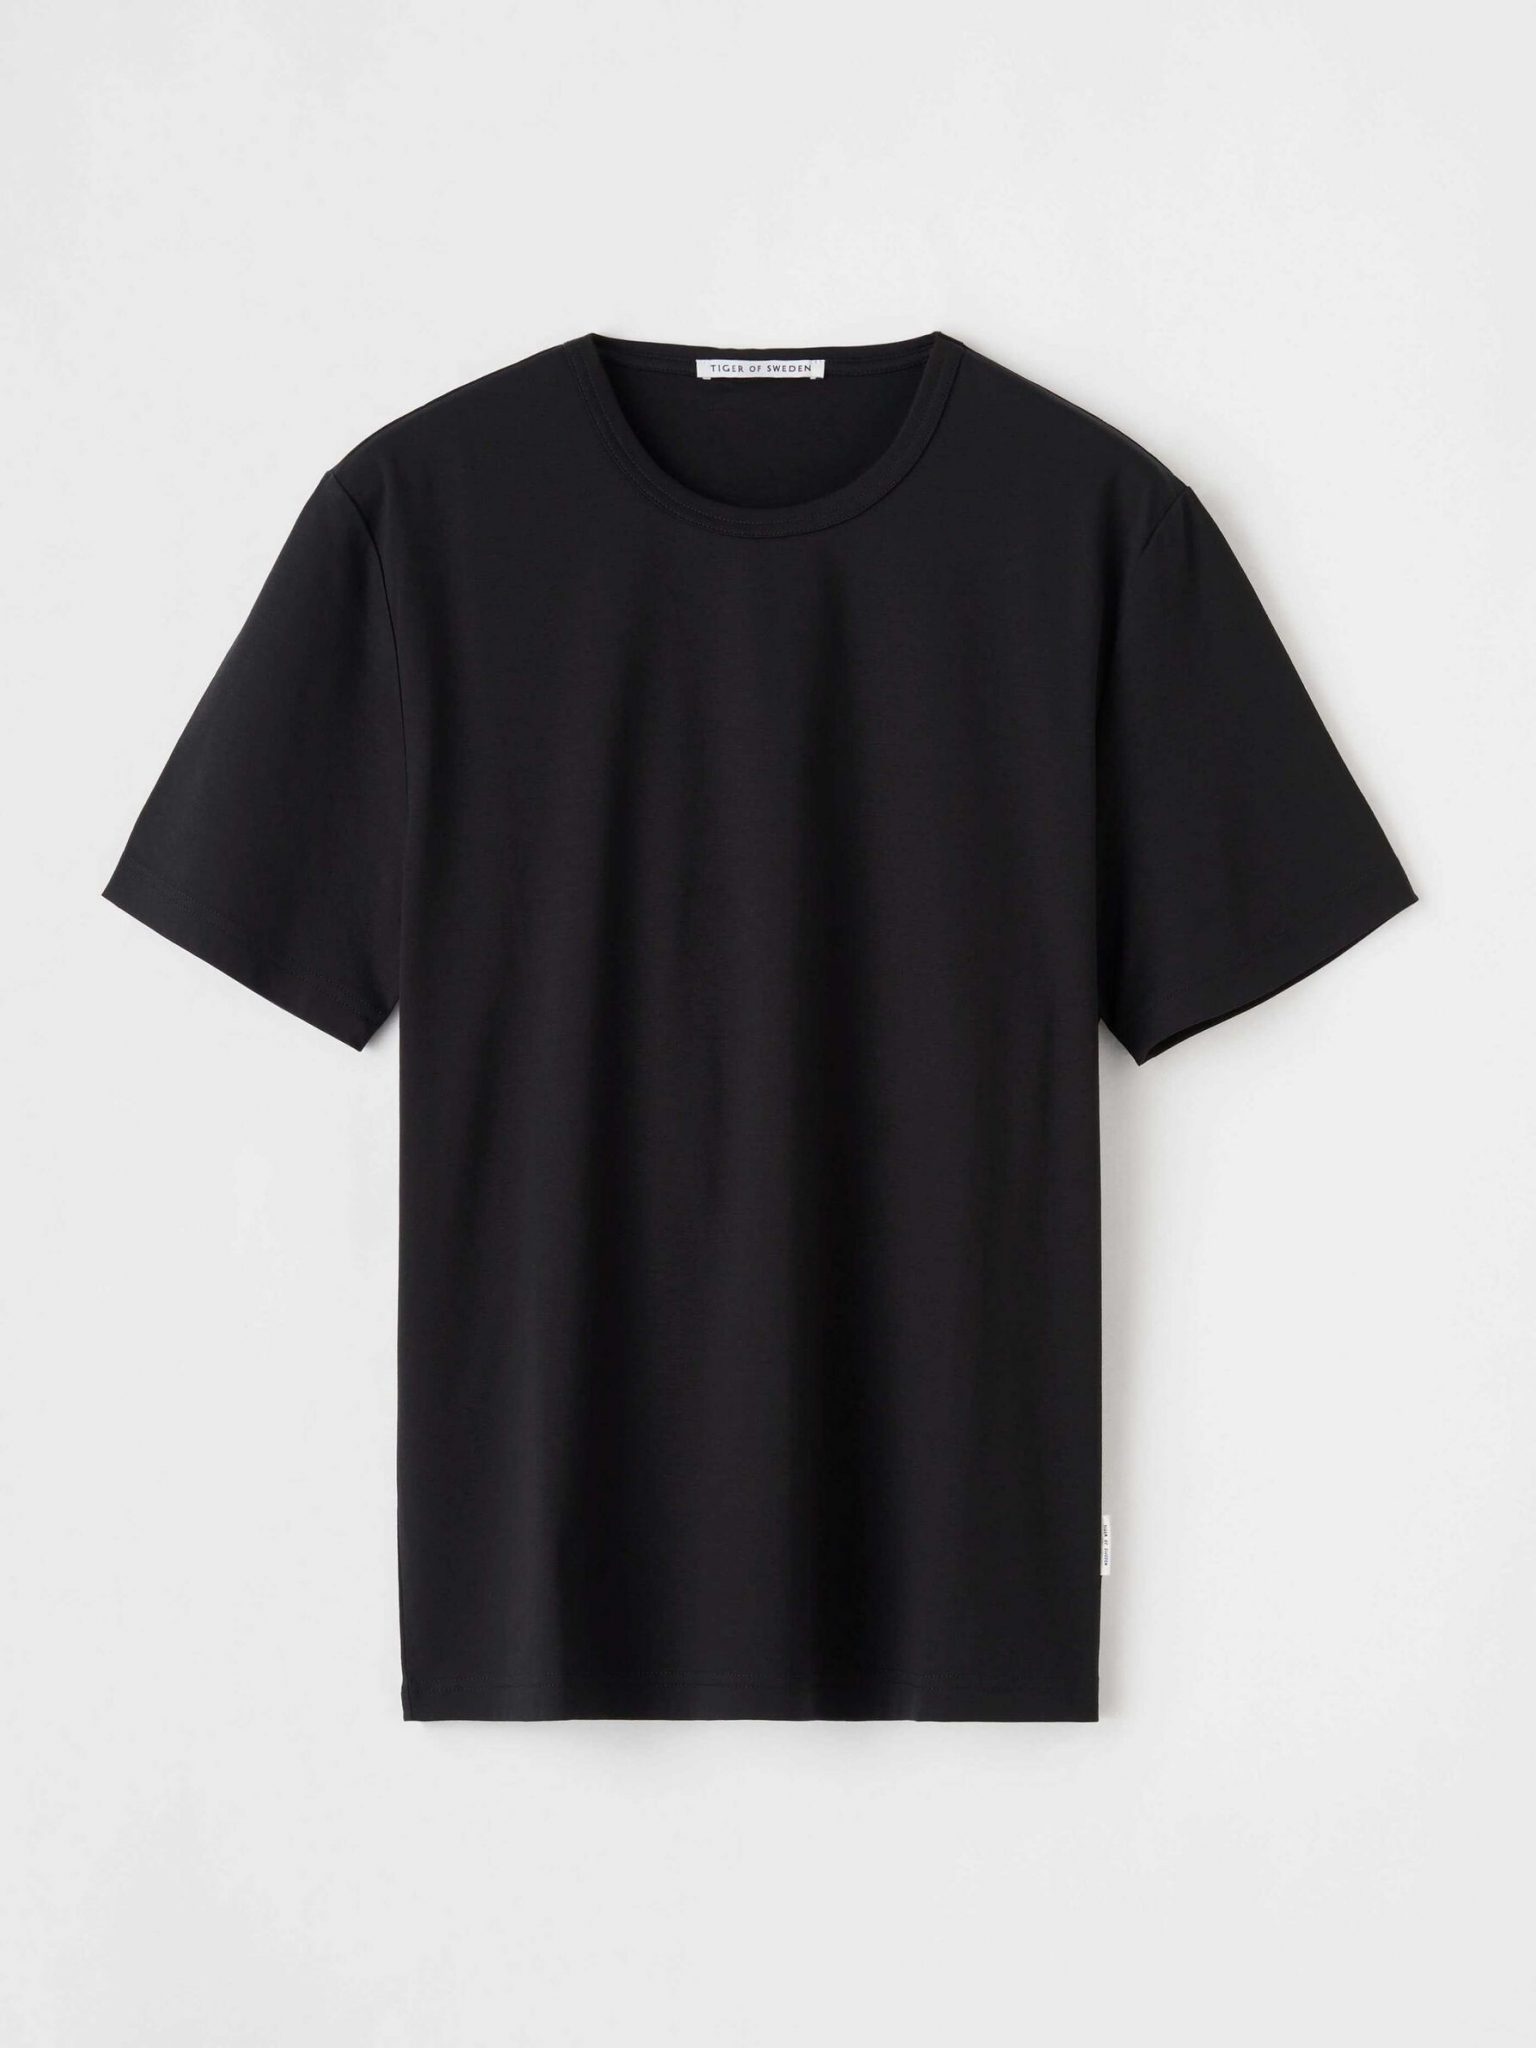 Buy Tiger of Sweden Olaf T-shirt Black - Scandinavian Fashion Store